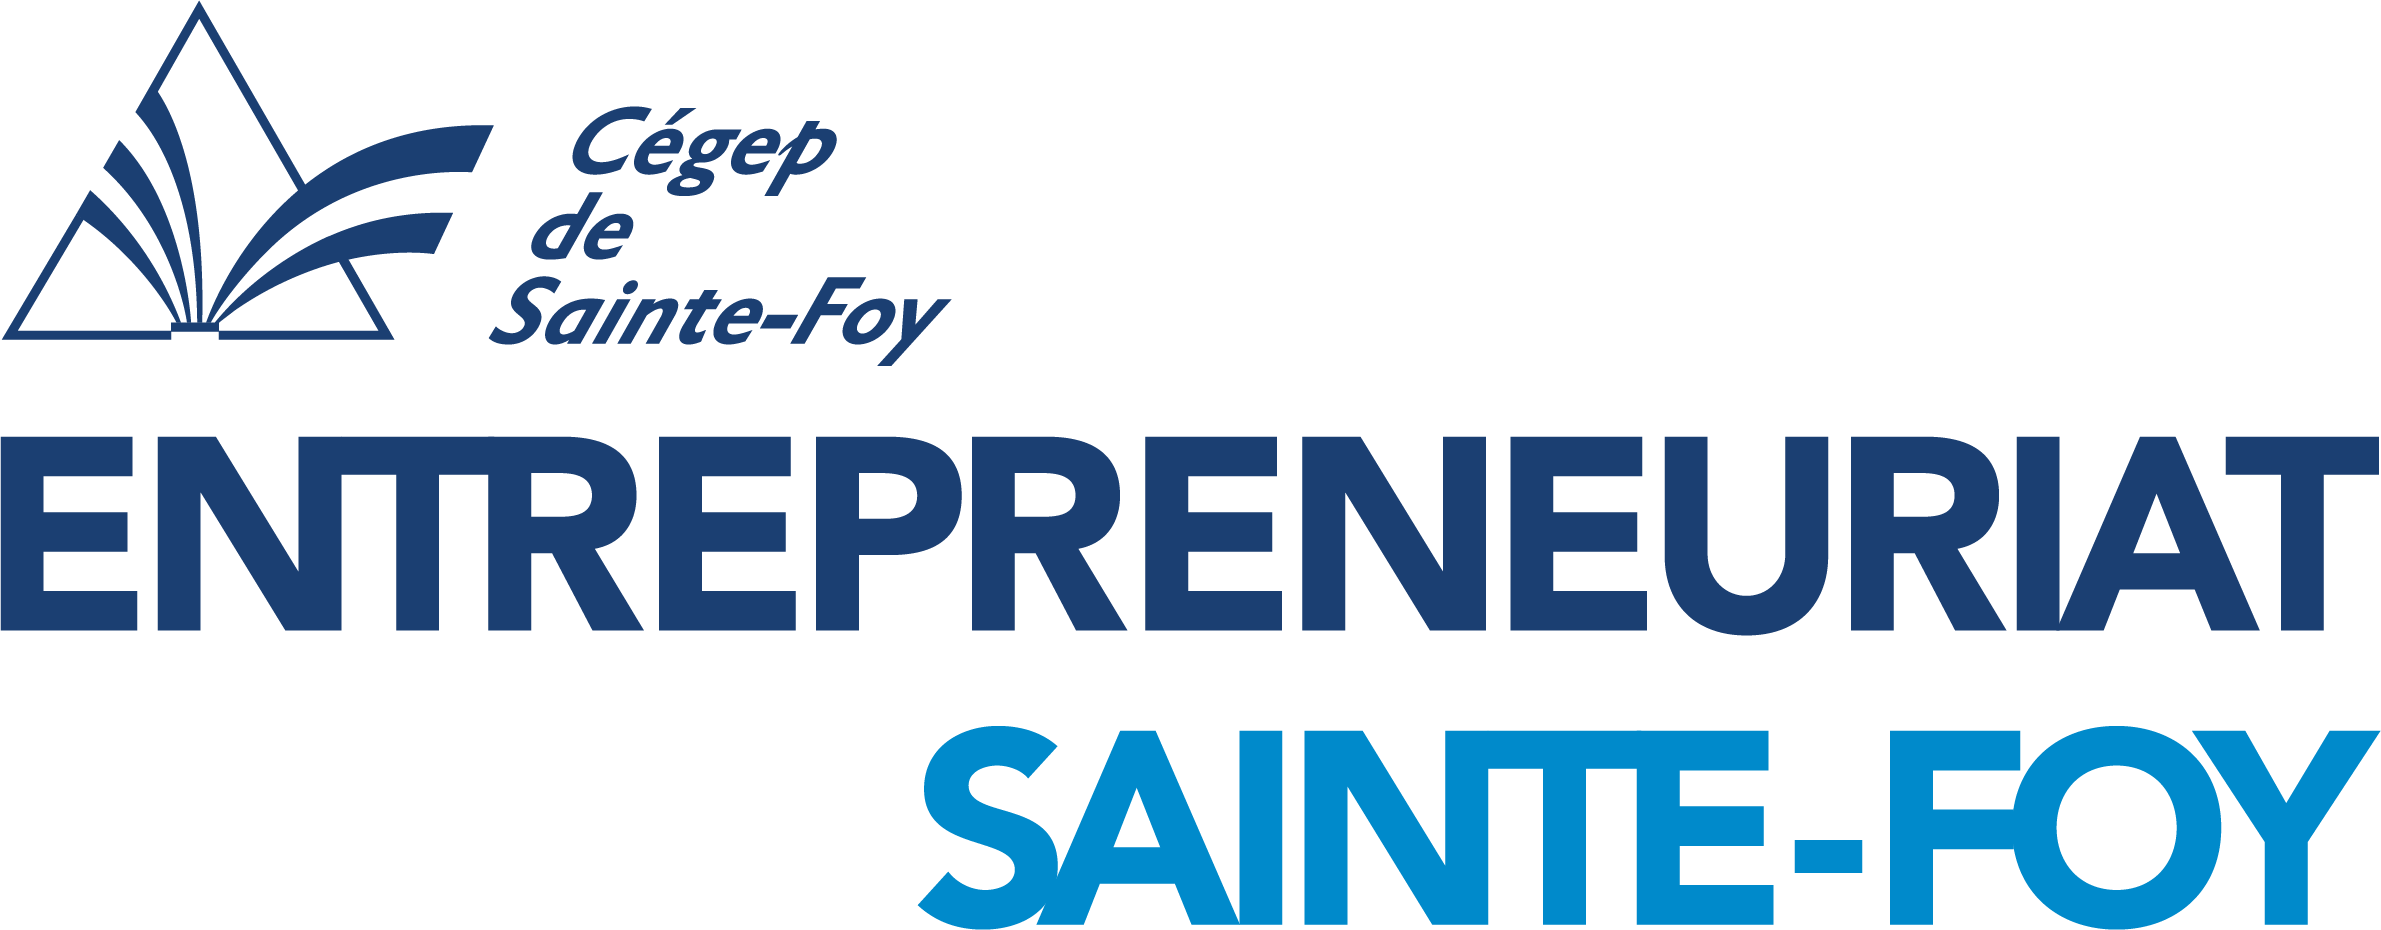 Entrepreneuriat du Cégep de Sainte-Foy